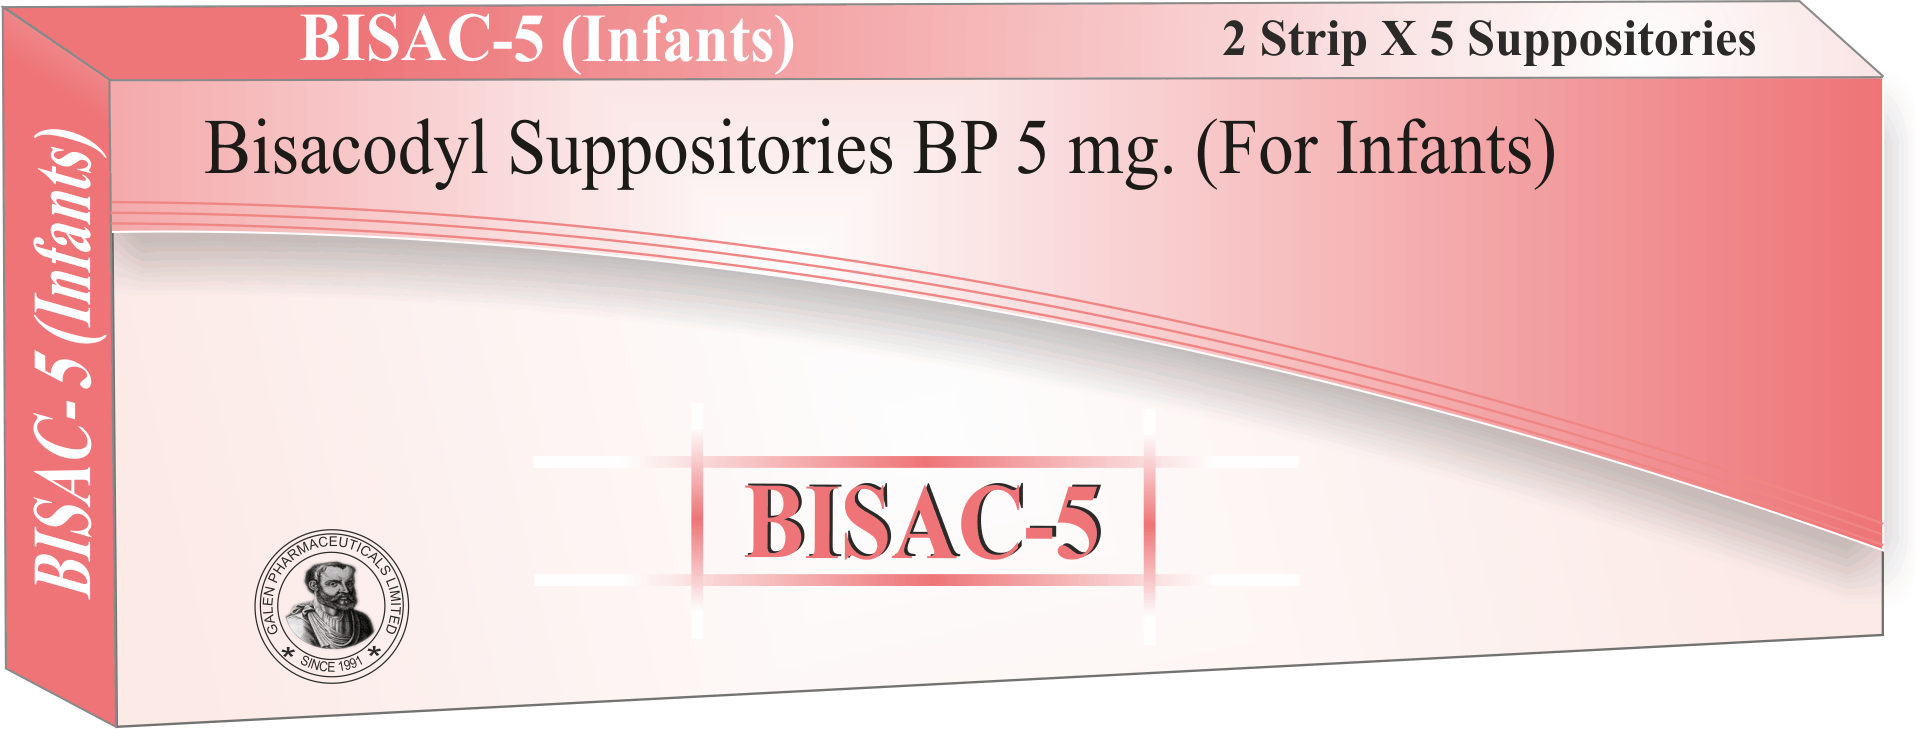 Bisacodyl Suppositories